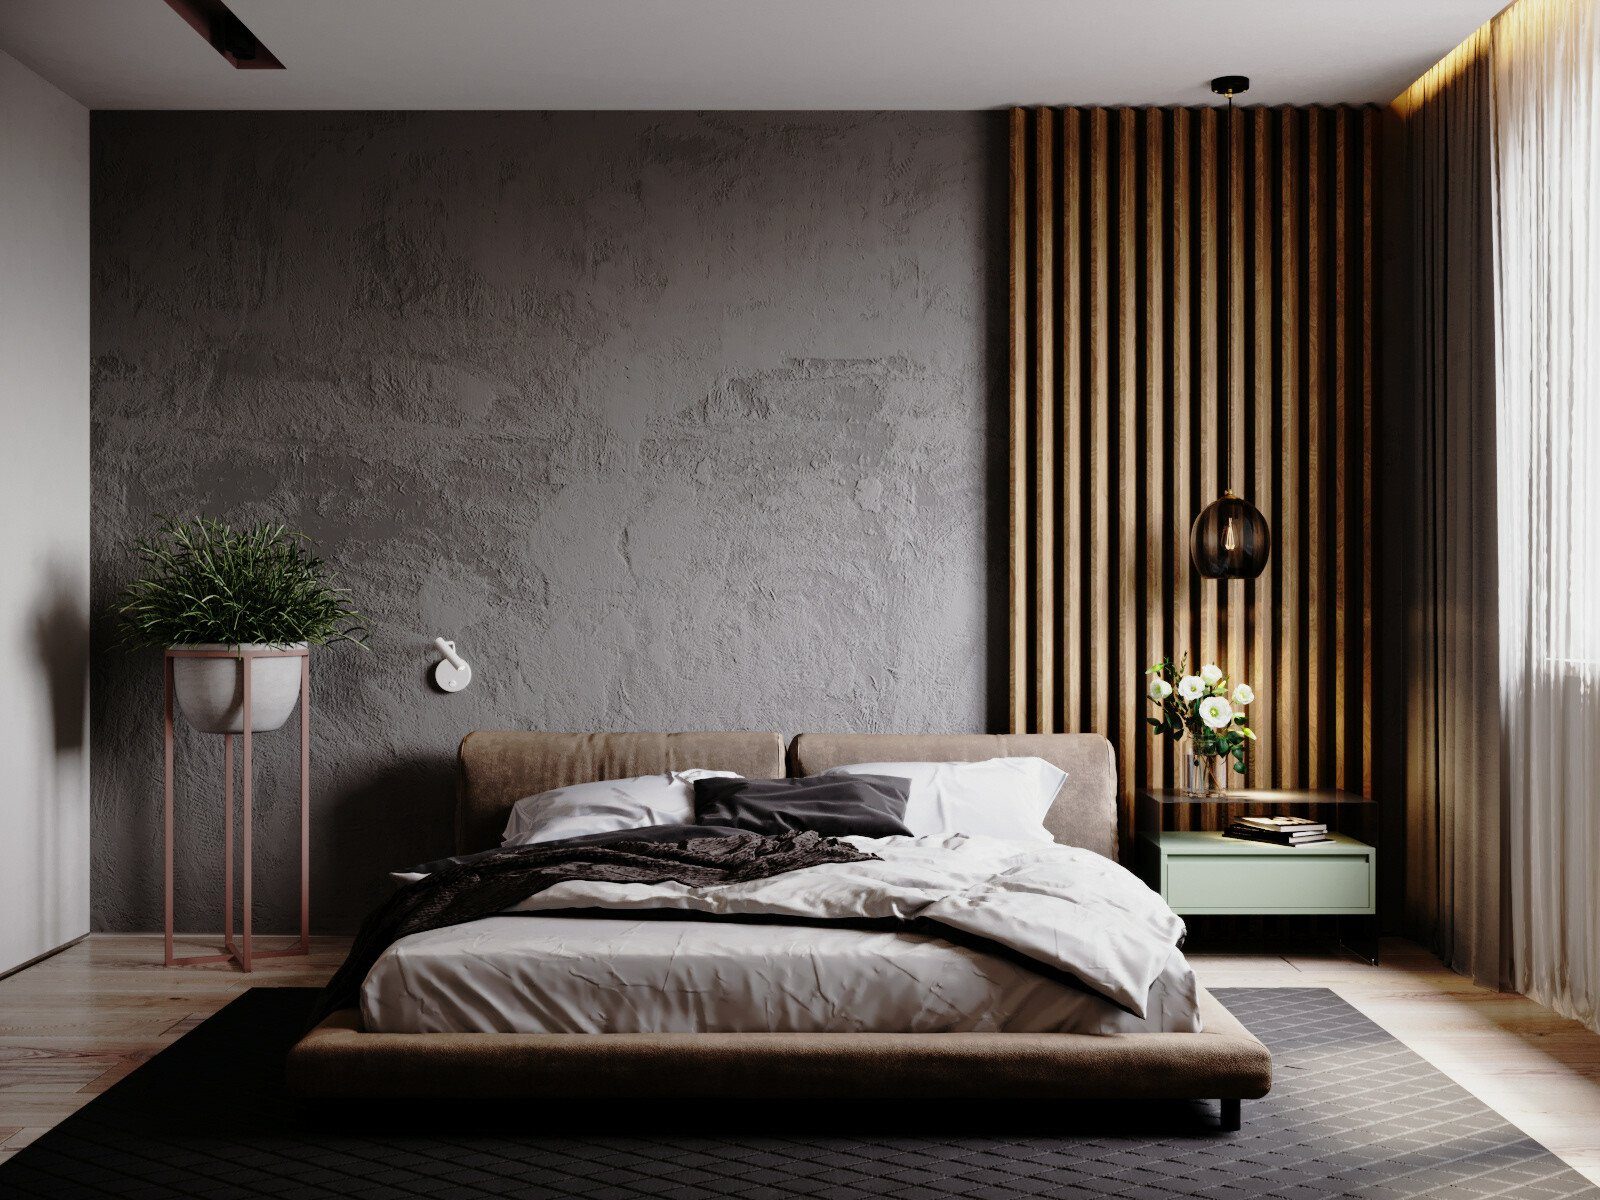 39+ Interior Design For Small Master Bedroom Ideas - Home Inspiration